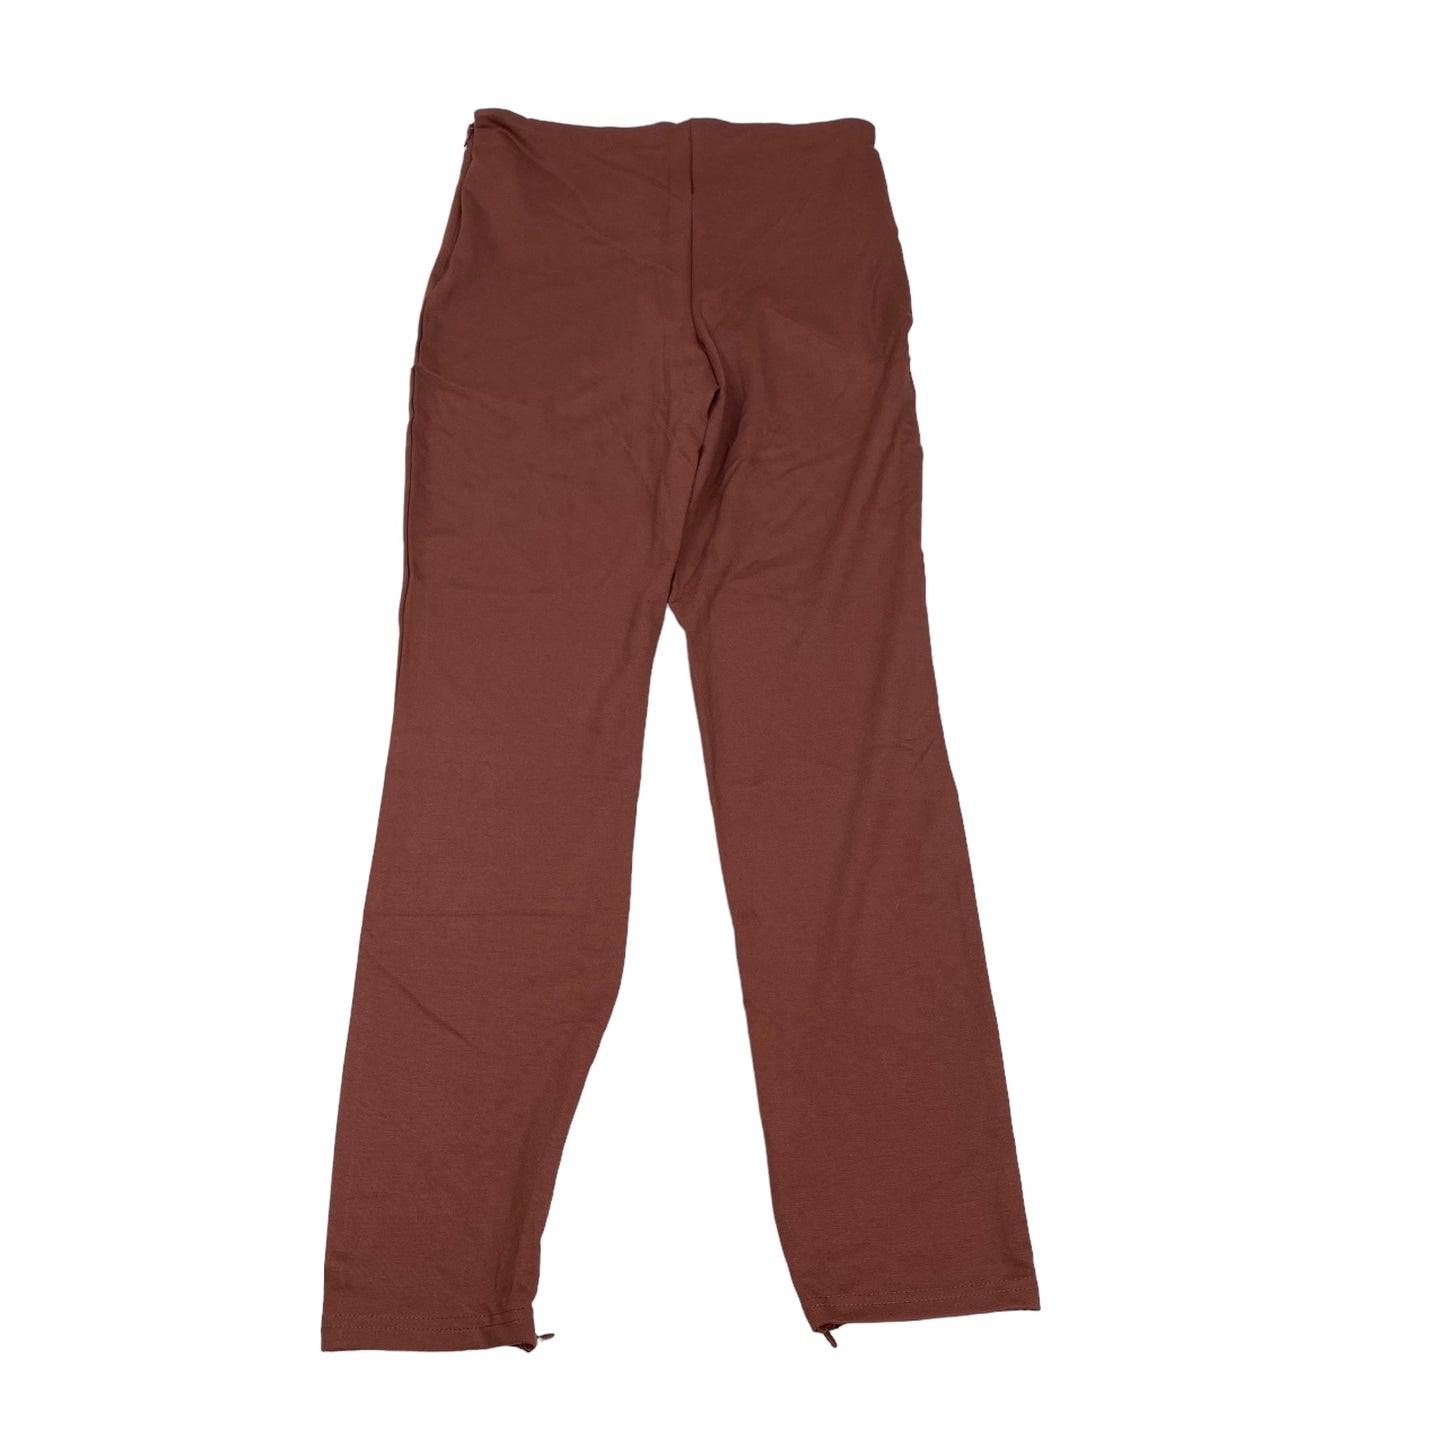 Brown Pants Leggings Fabletics, Size M